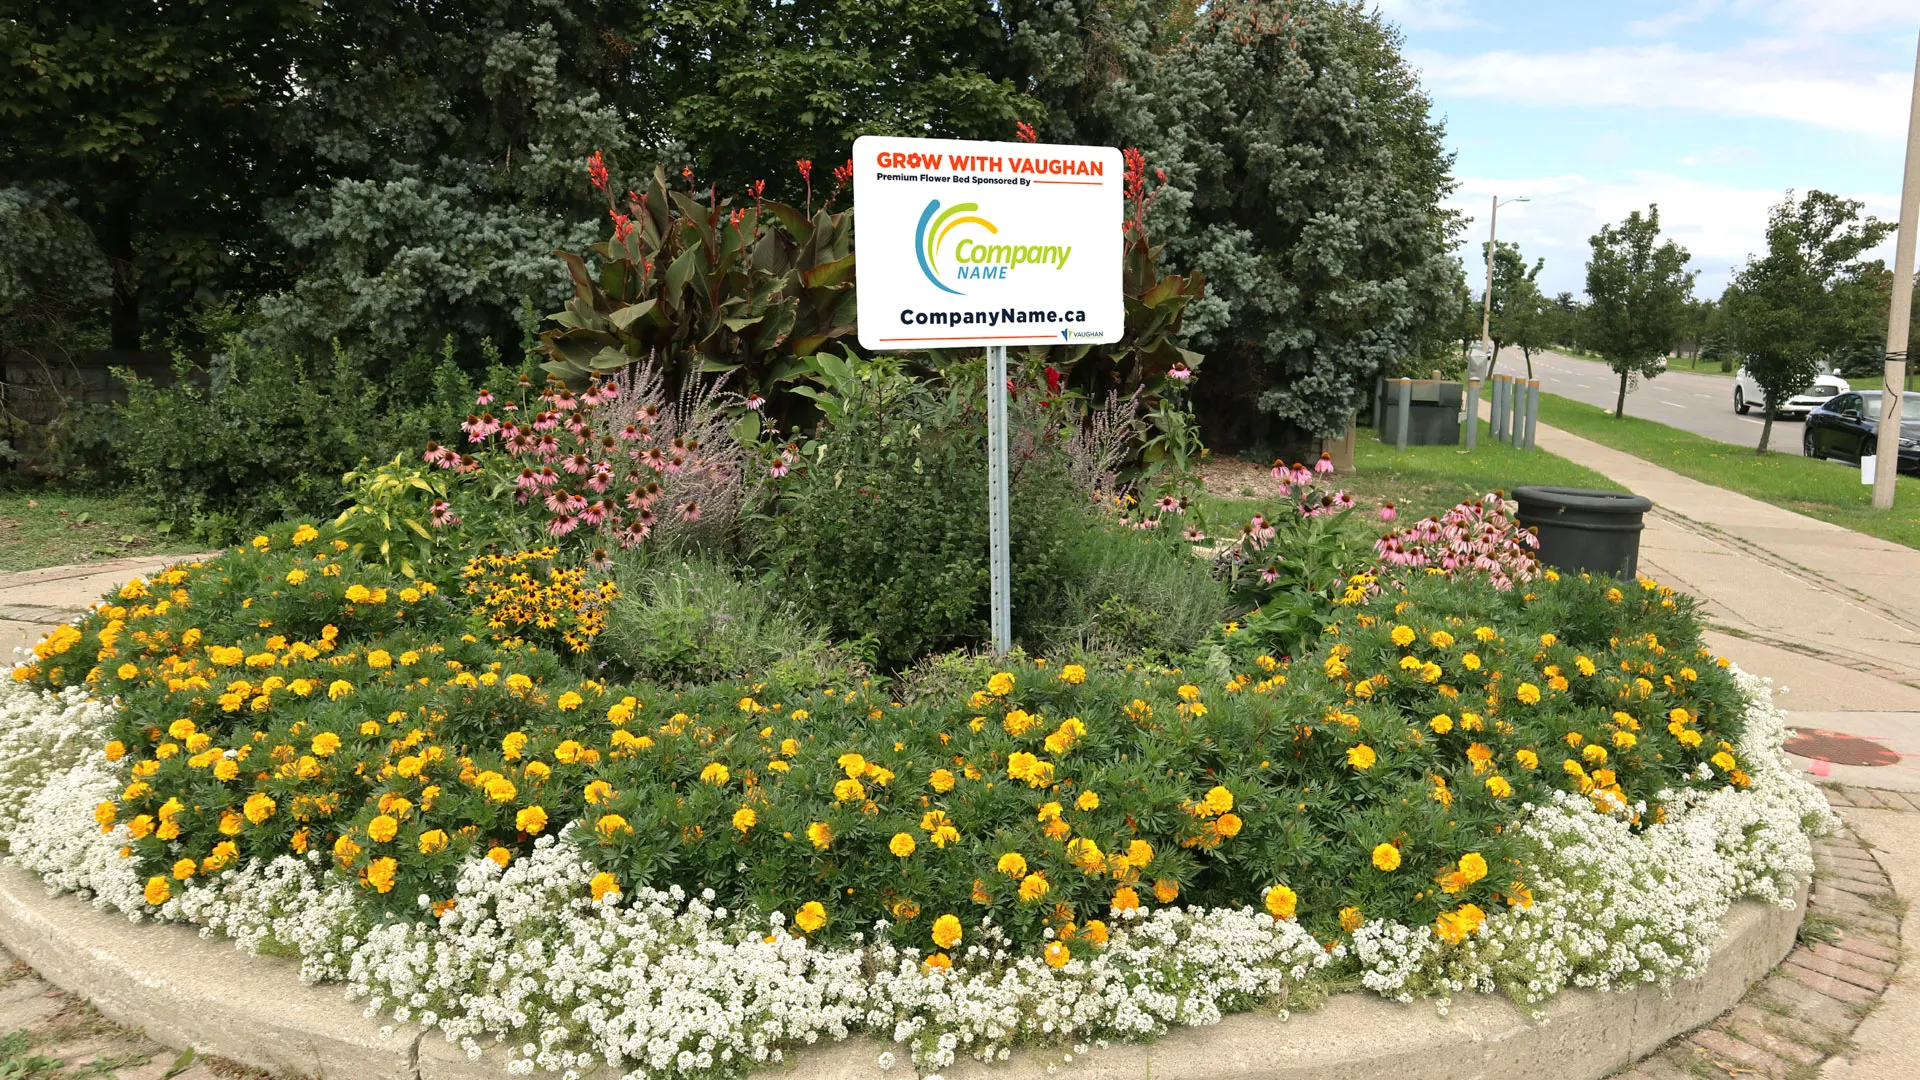 Garden in Vaughan with Grow With Vaughan sign 